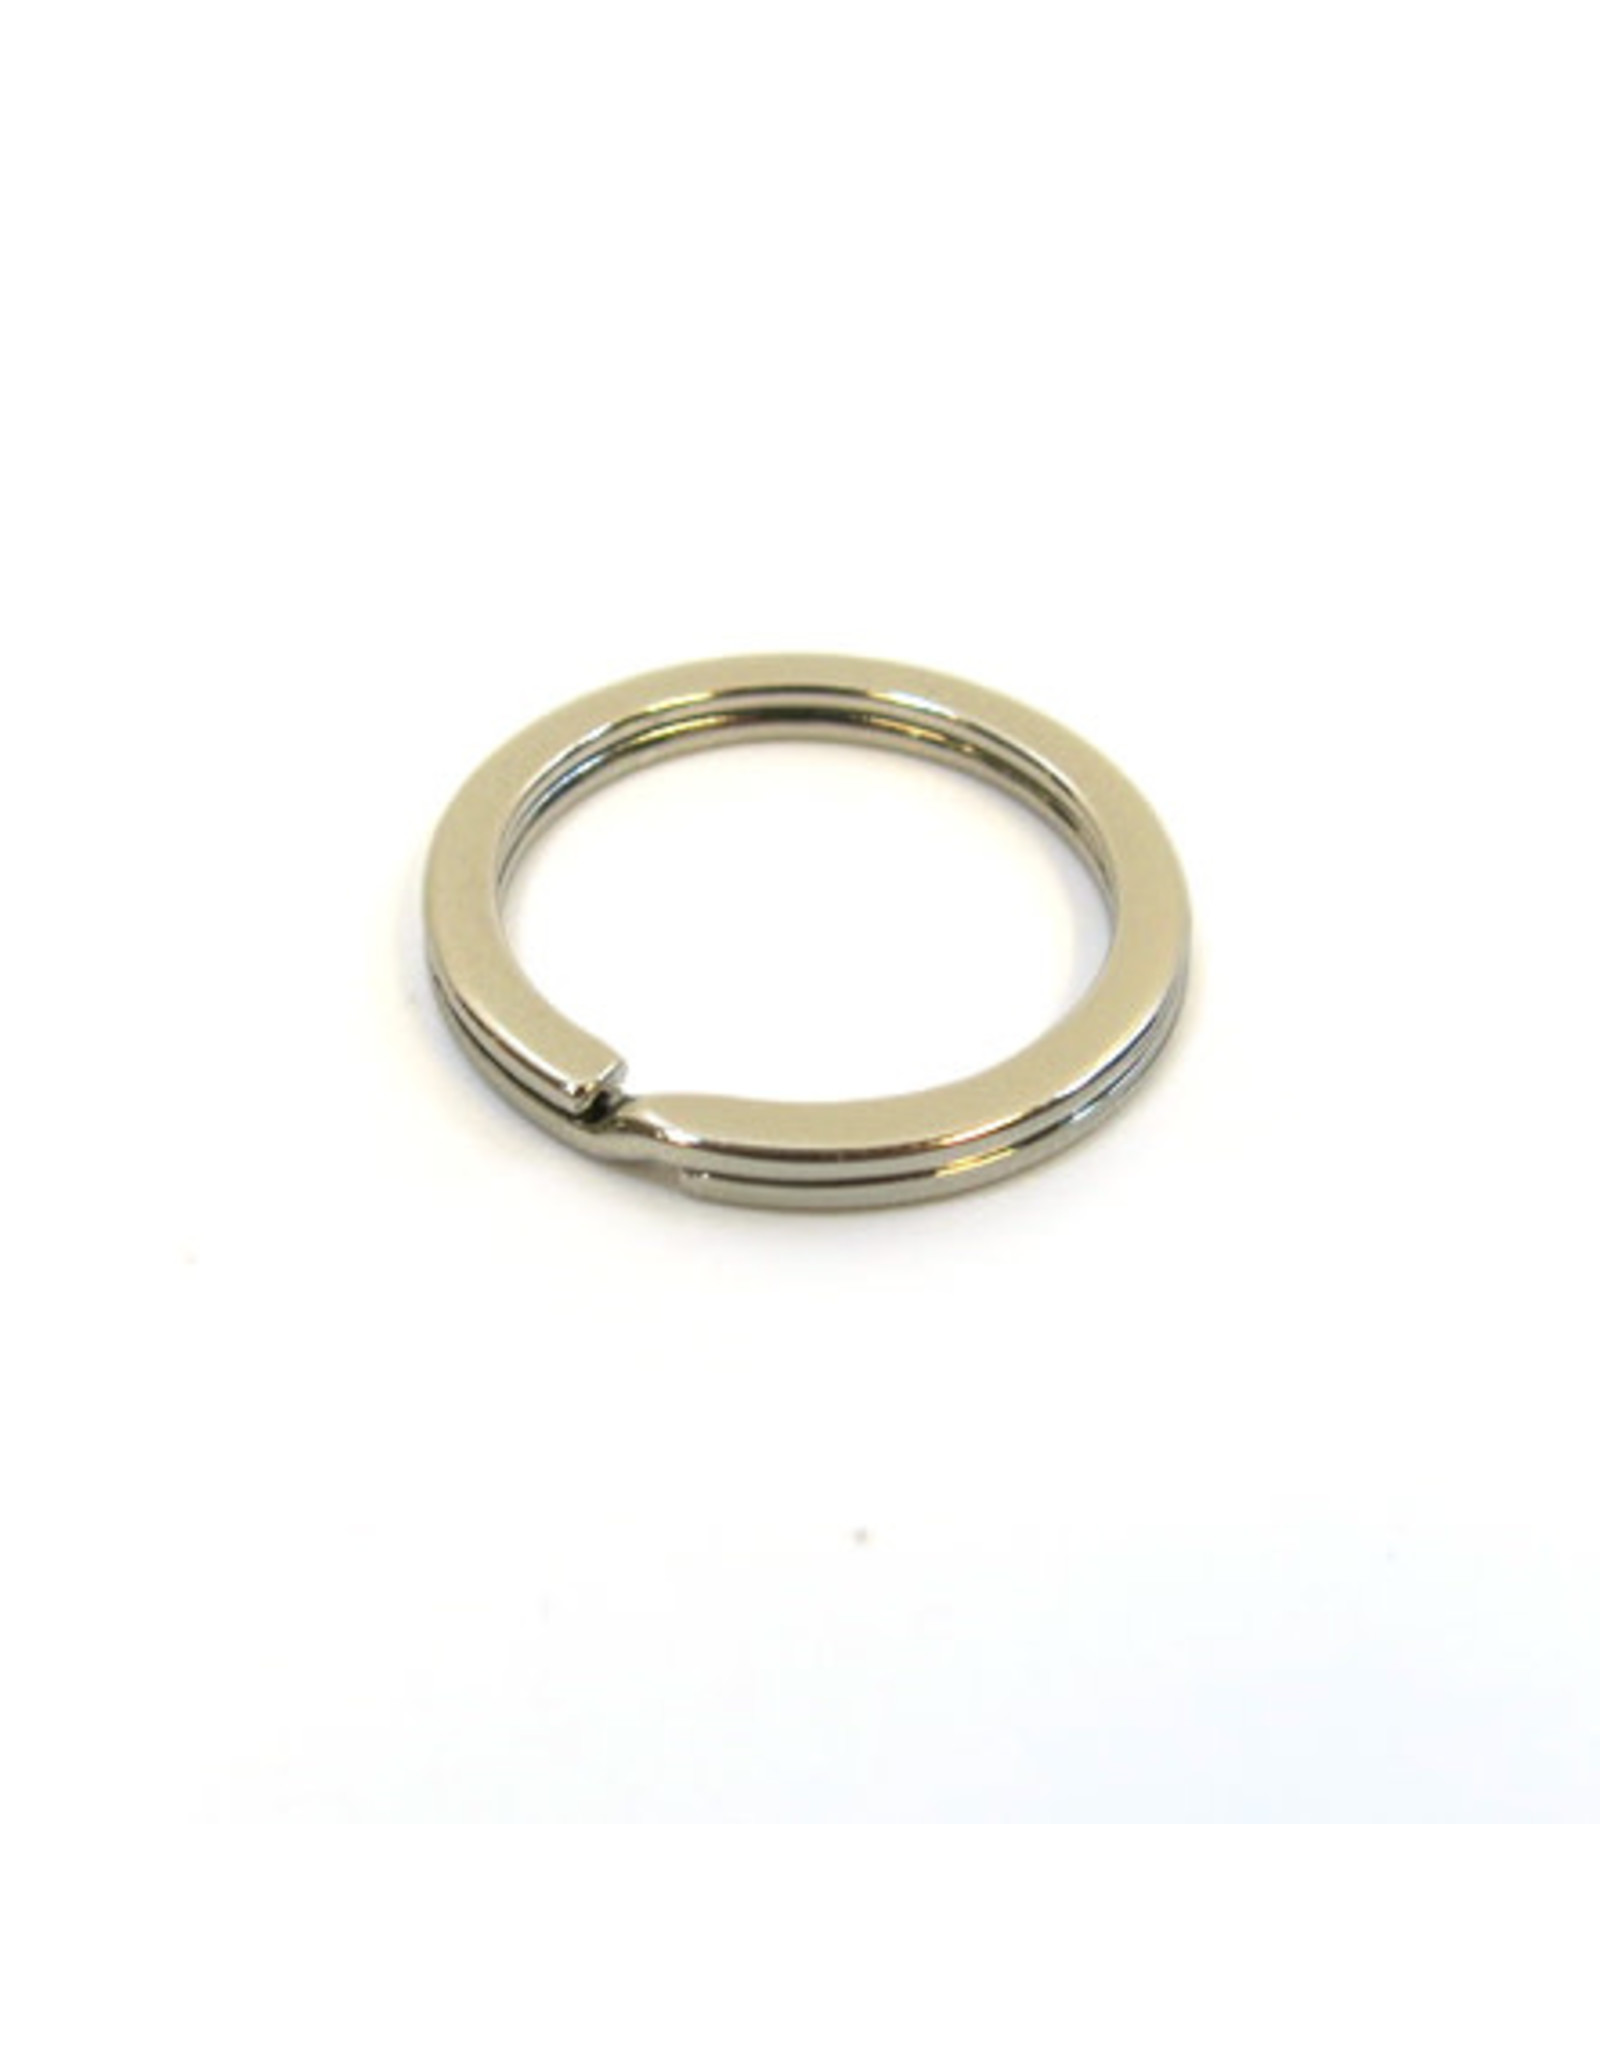 Key ring 20mm